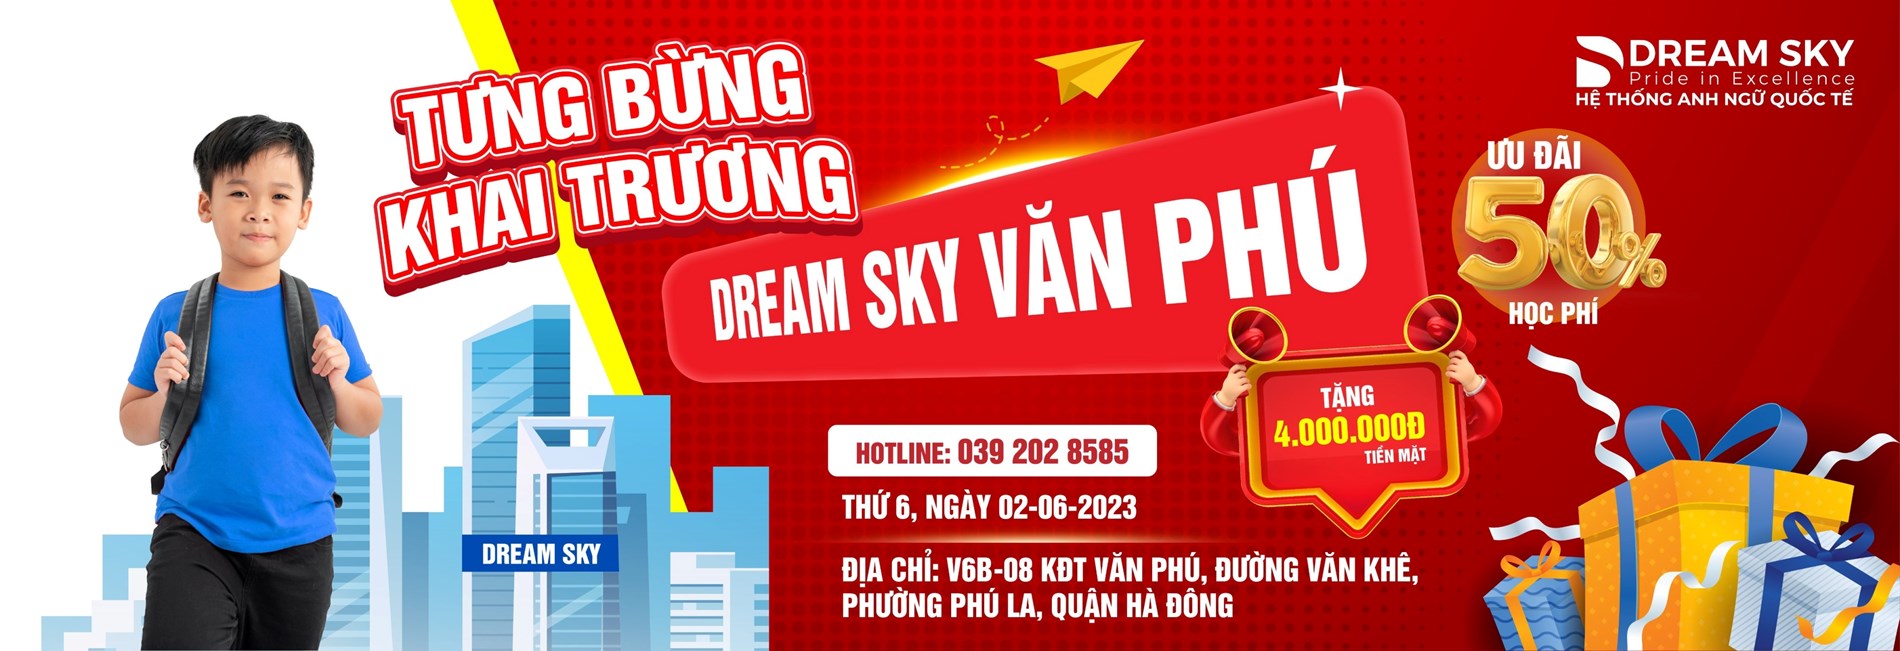 Dream Sky Văn Phú